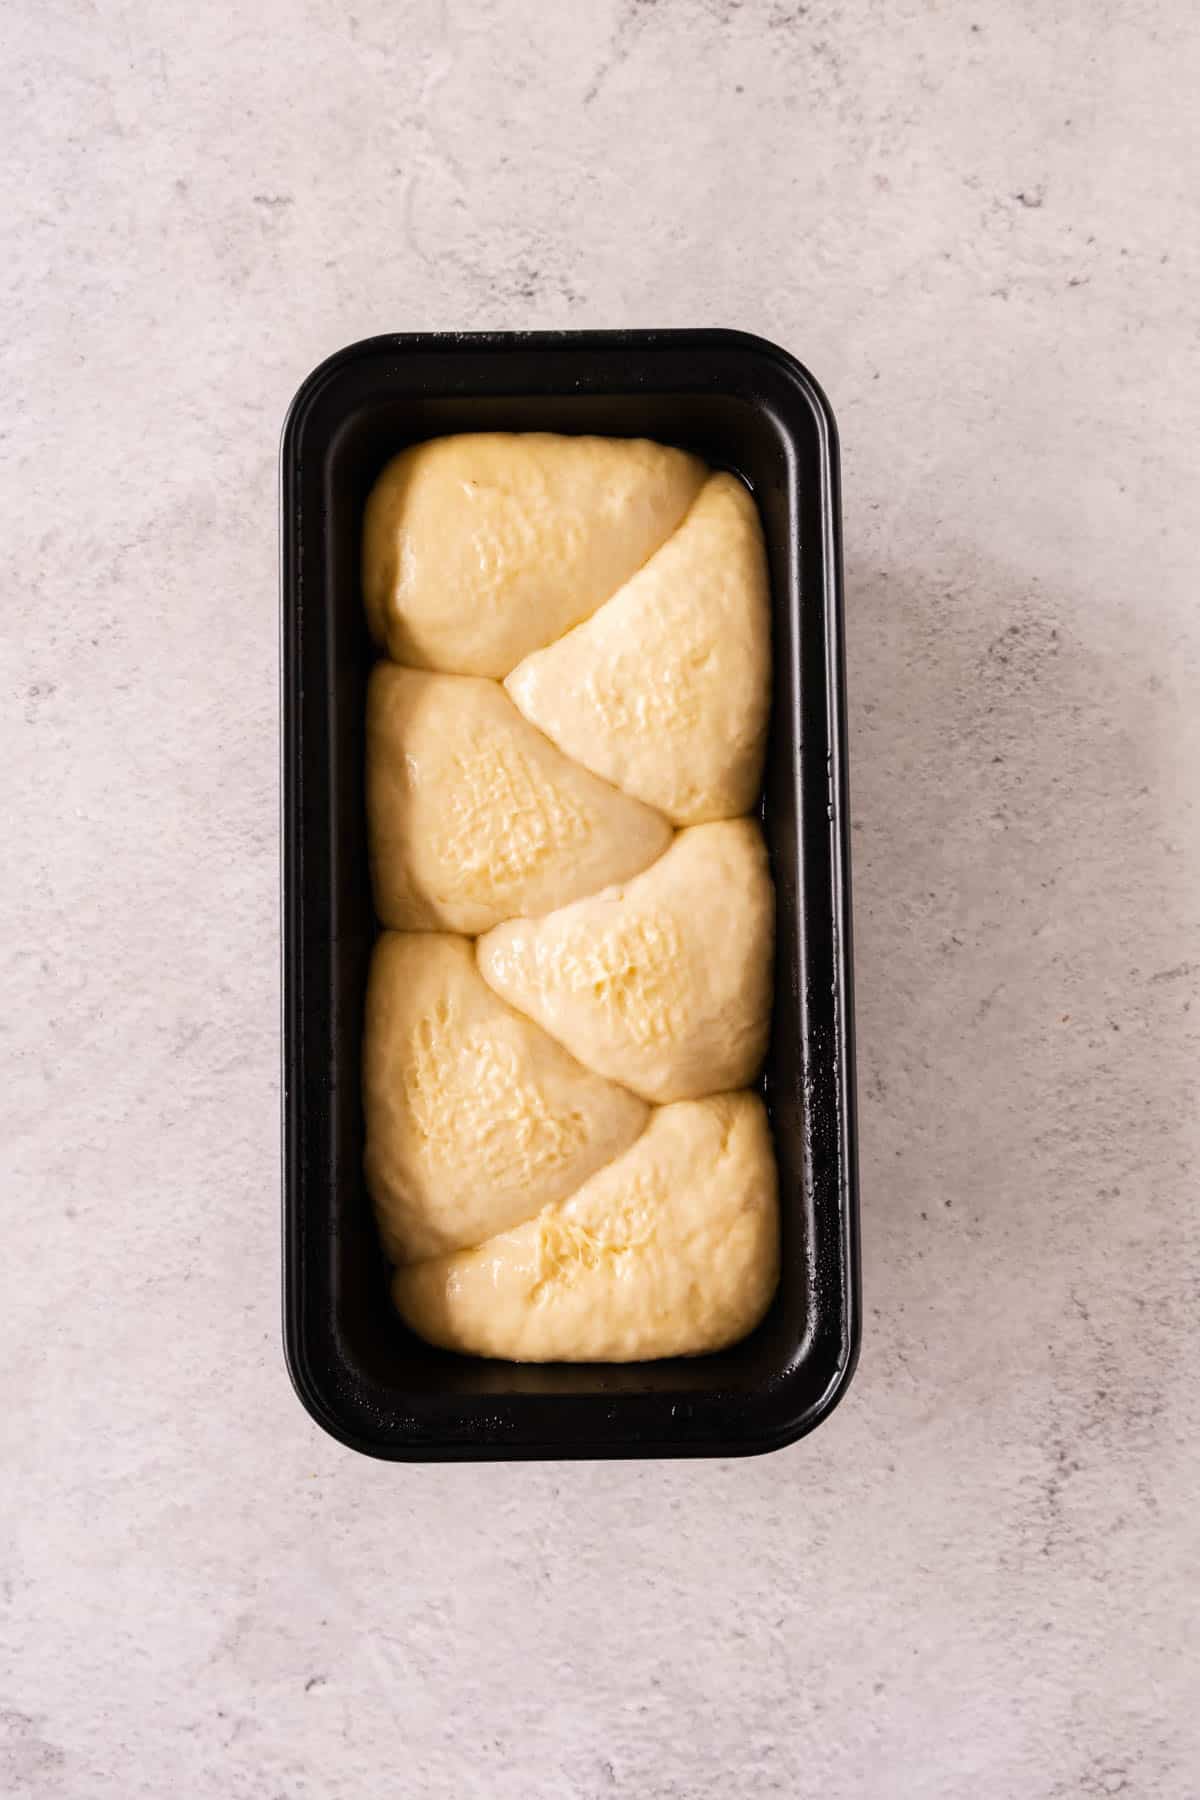 Brioche bread dough risen in the loaf pan. 